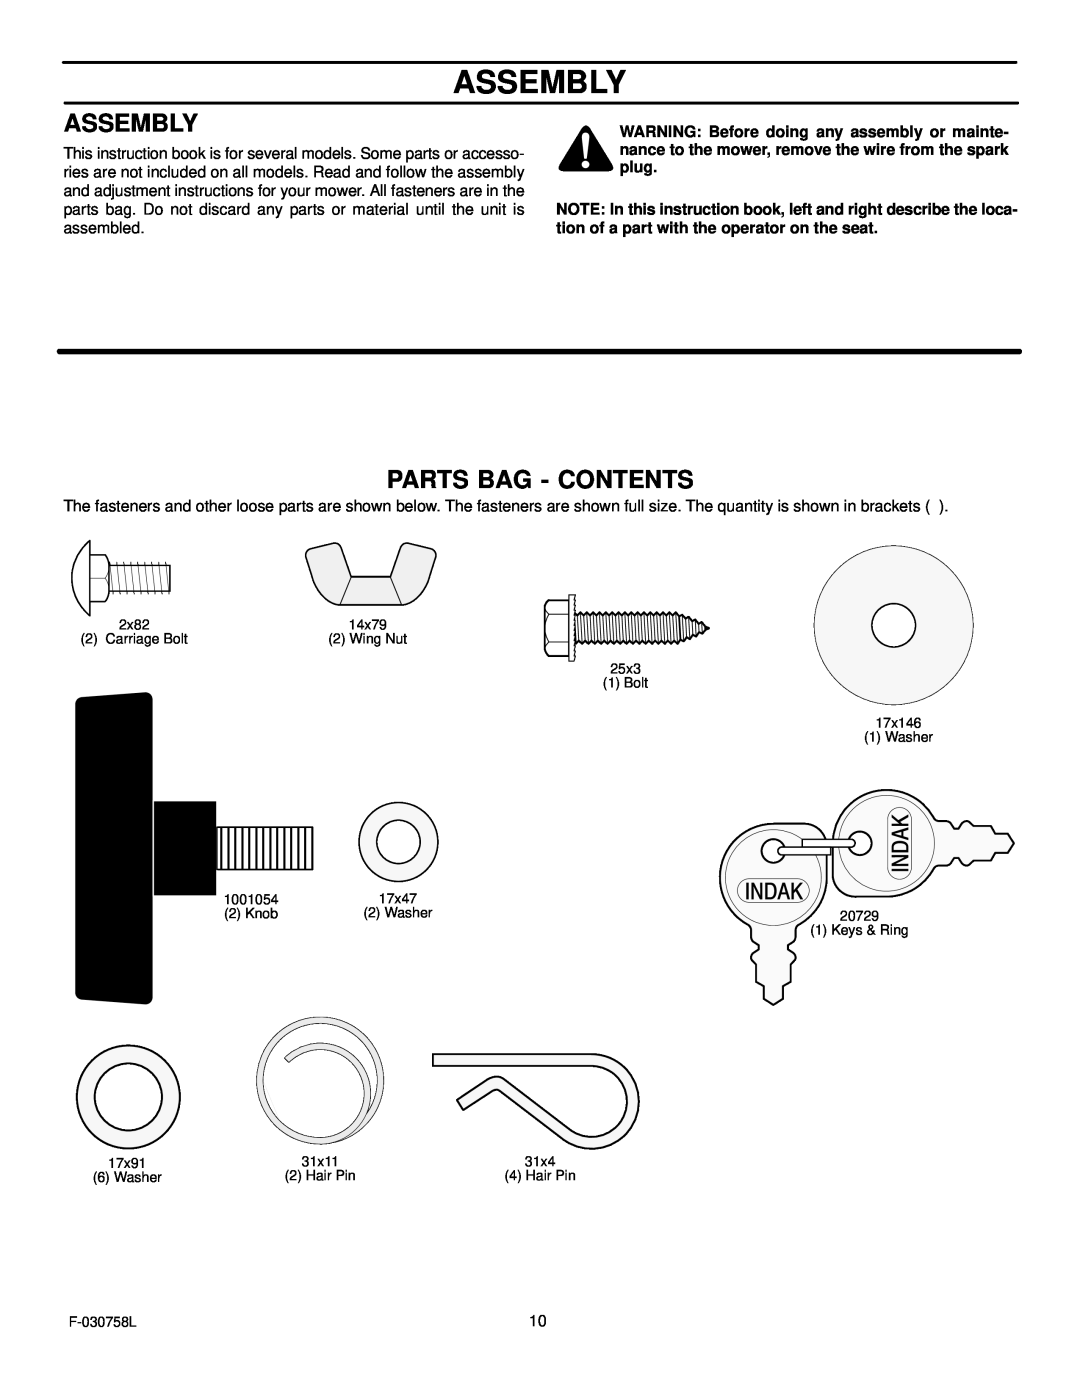 Murray 465609x24A manual Assembly, Parts Bag - Contents 